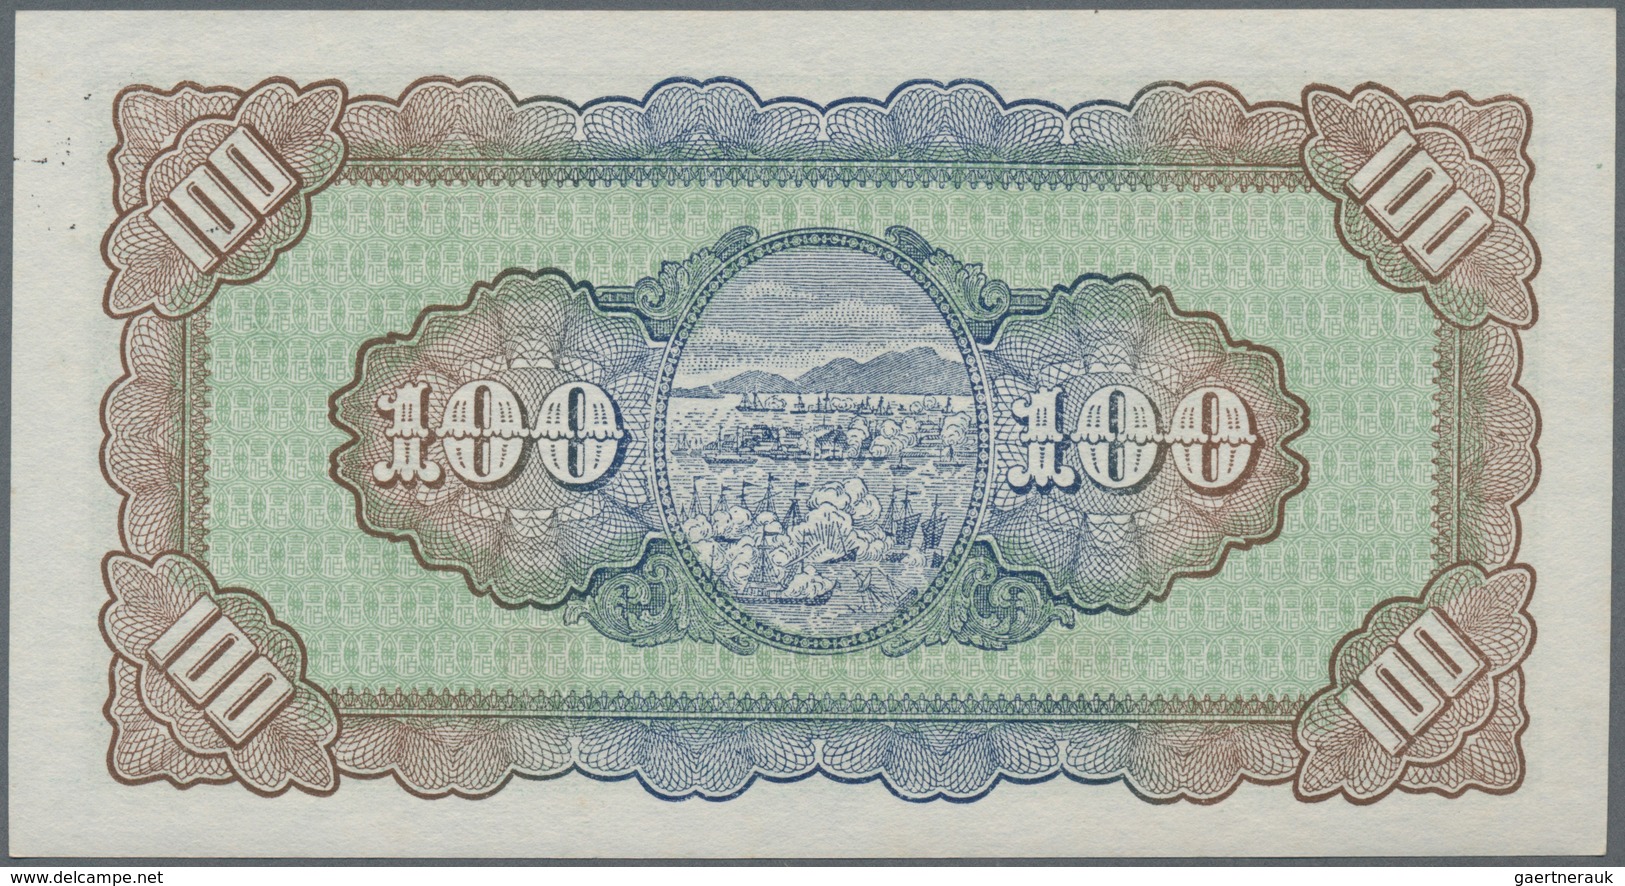 China: Bank of Taiwan set with 4 banknotes 5, 10, 100 and 500 Yuan Year 35 after 1911 (Proclamation